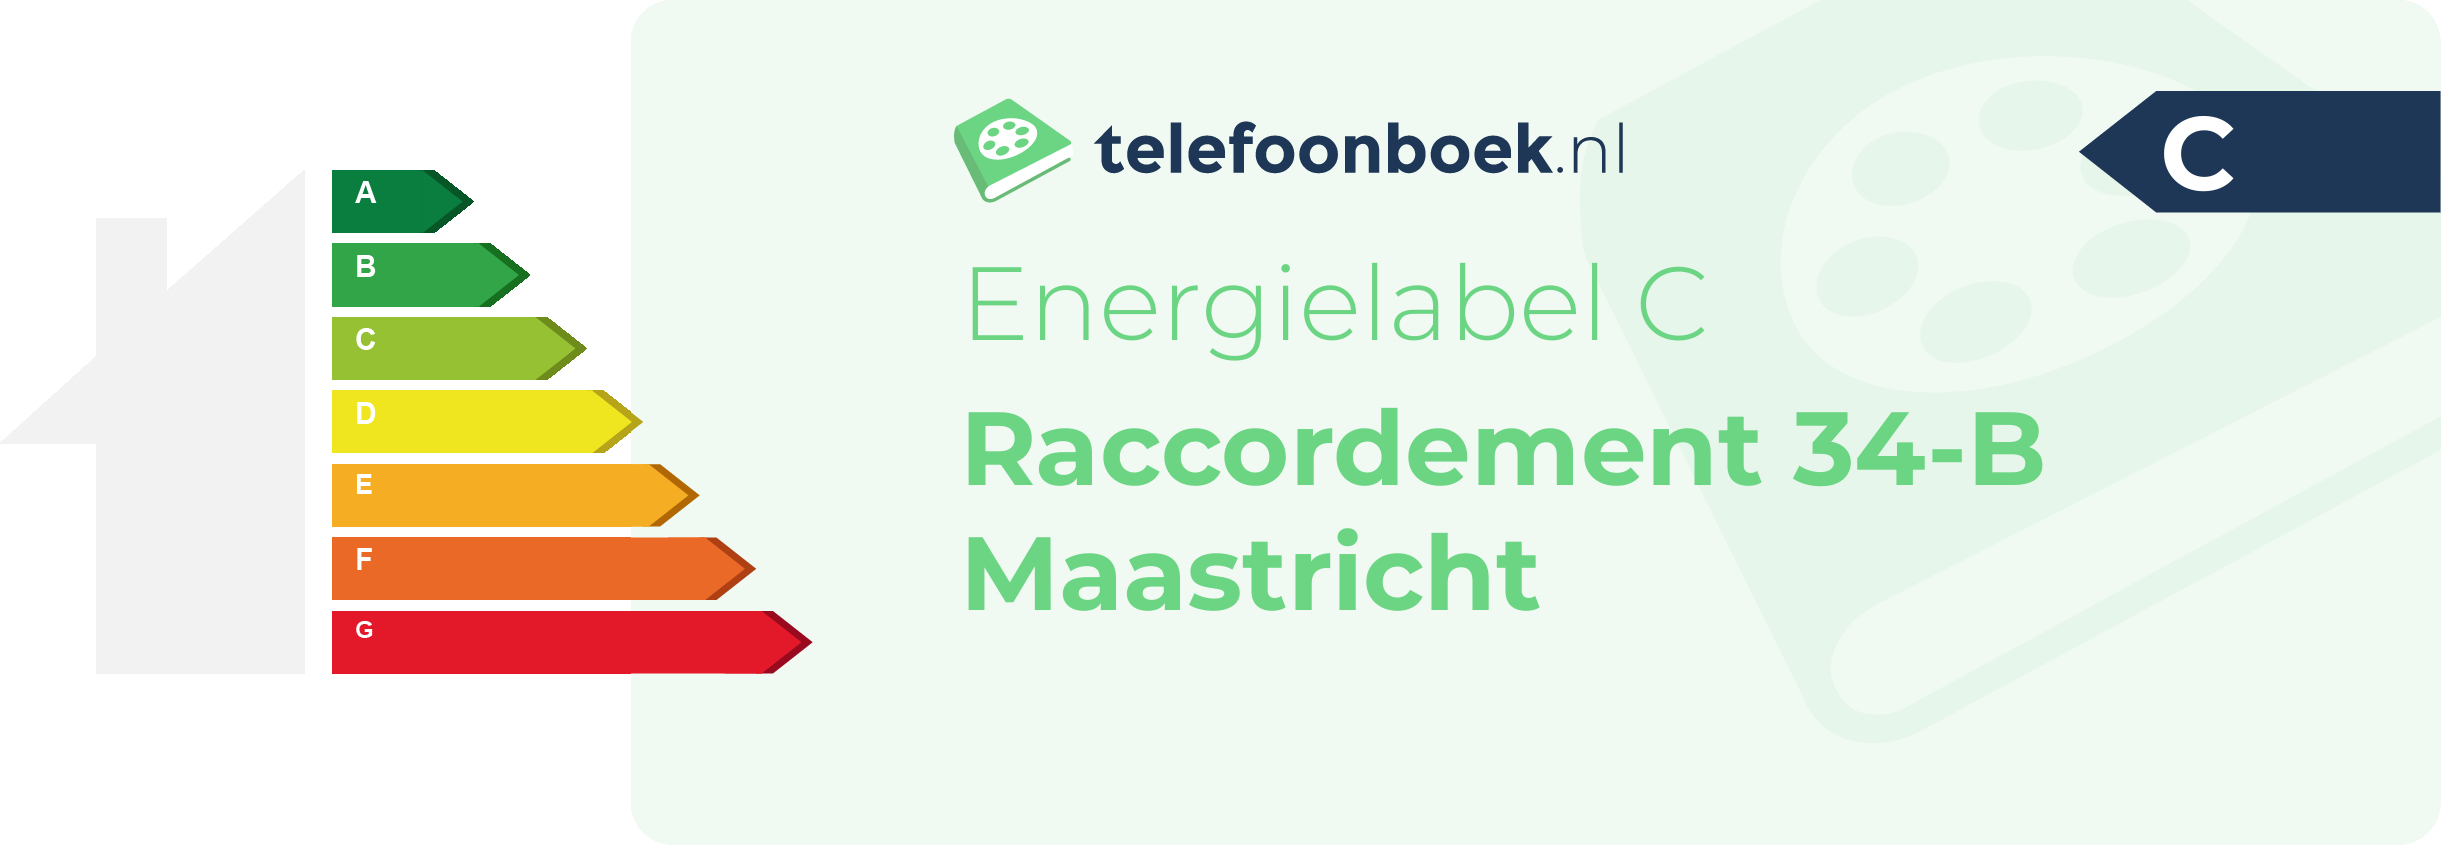 Energielabel Raccordement 34-B Maastricht